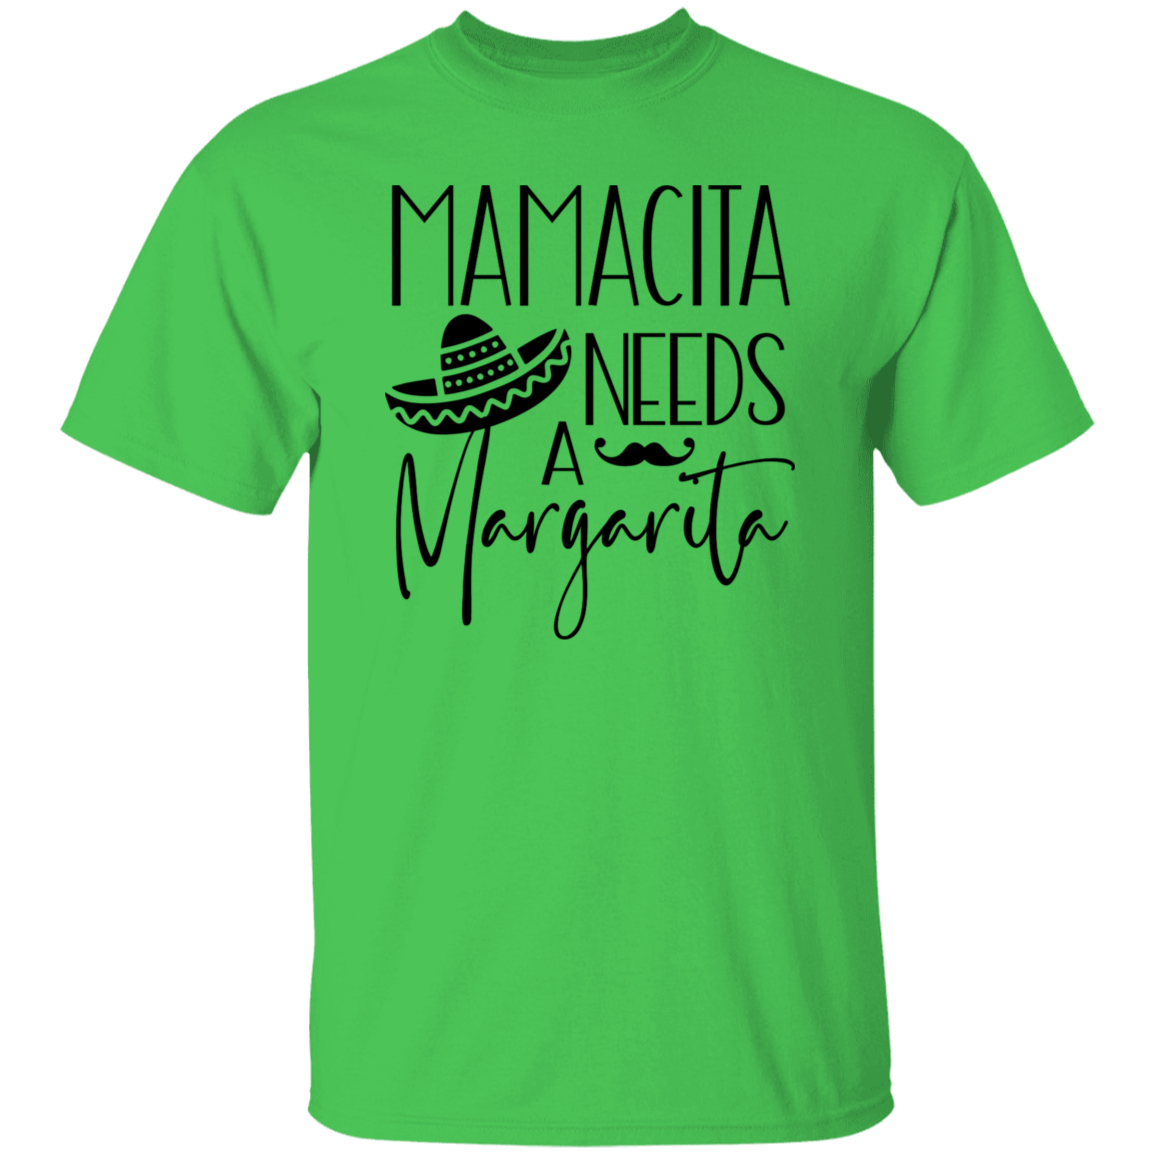 Mamacita Needs a A Margarita